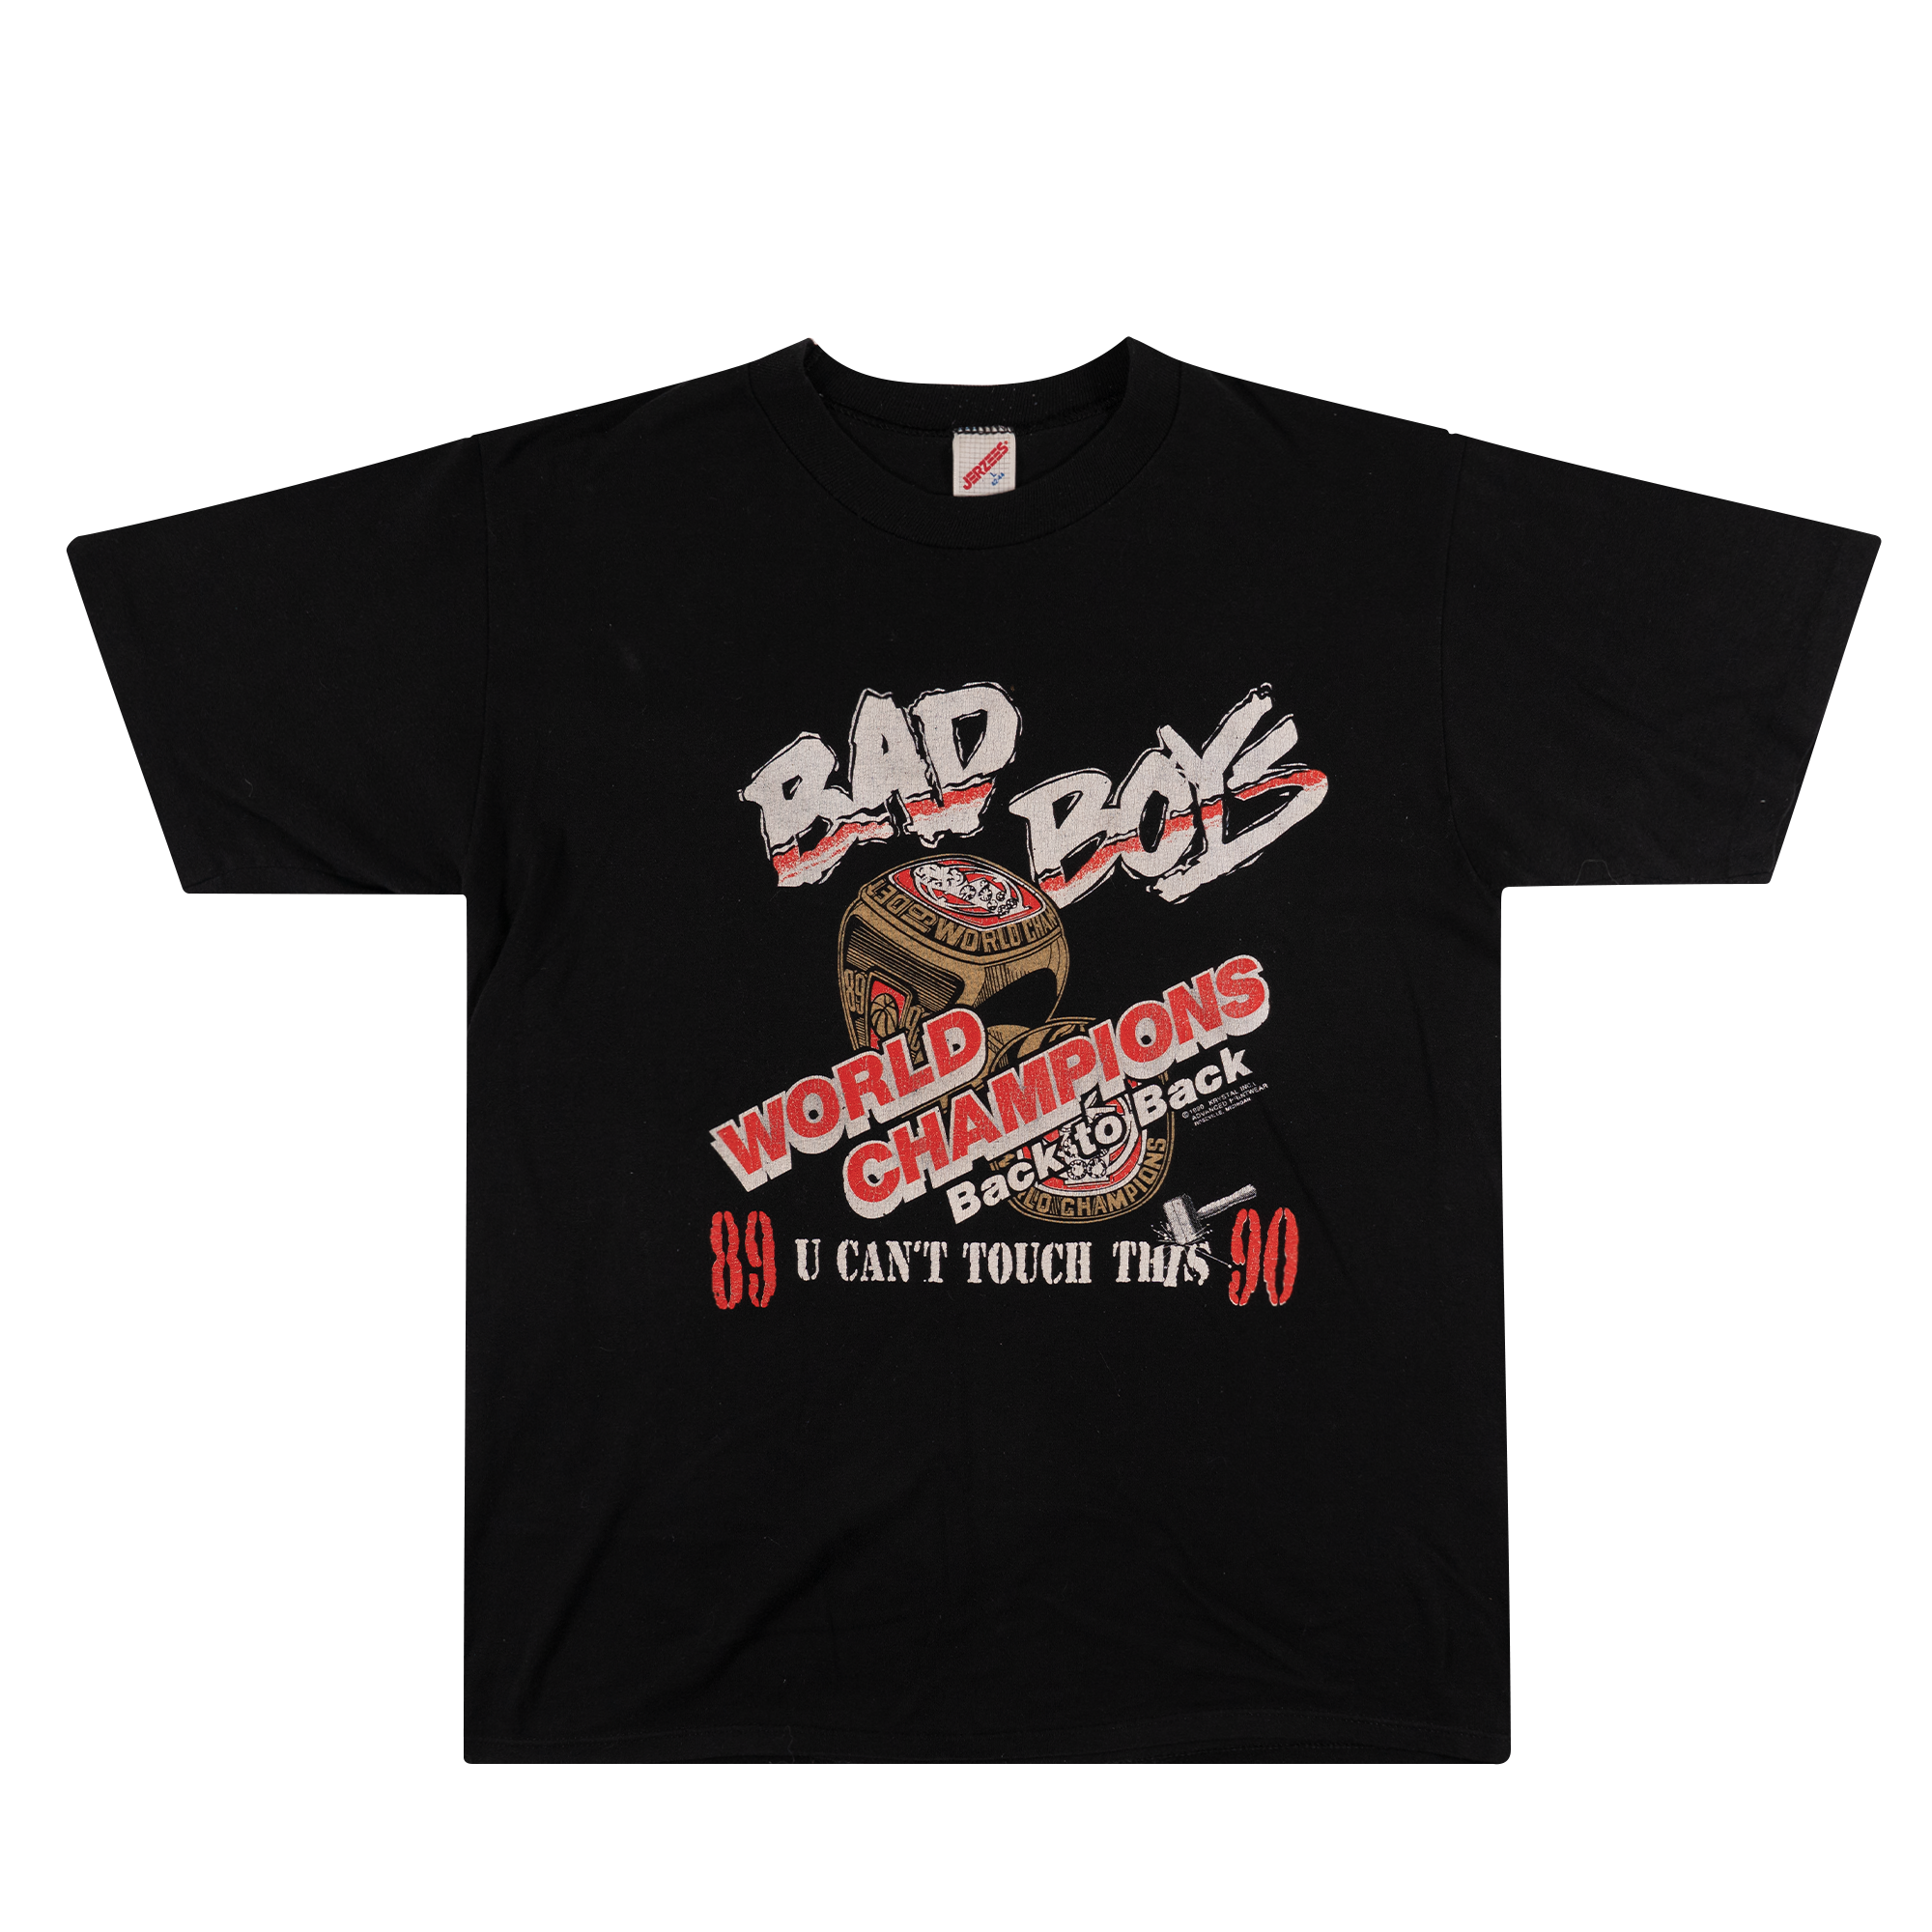 Detroit Pistons Bad Boys "Back2Back" Champs 1990 NBA Tee Black-PLUS